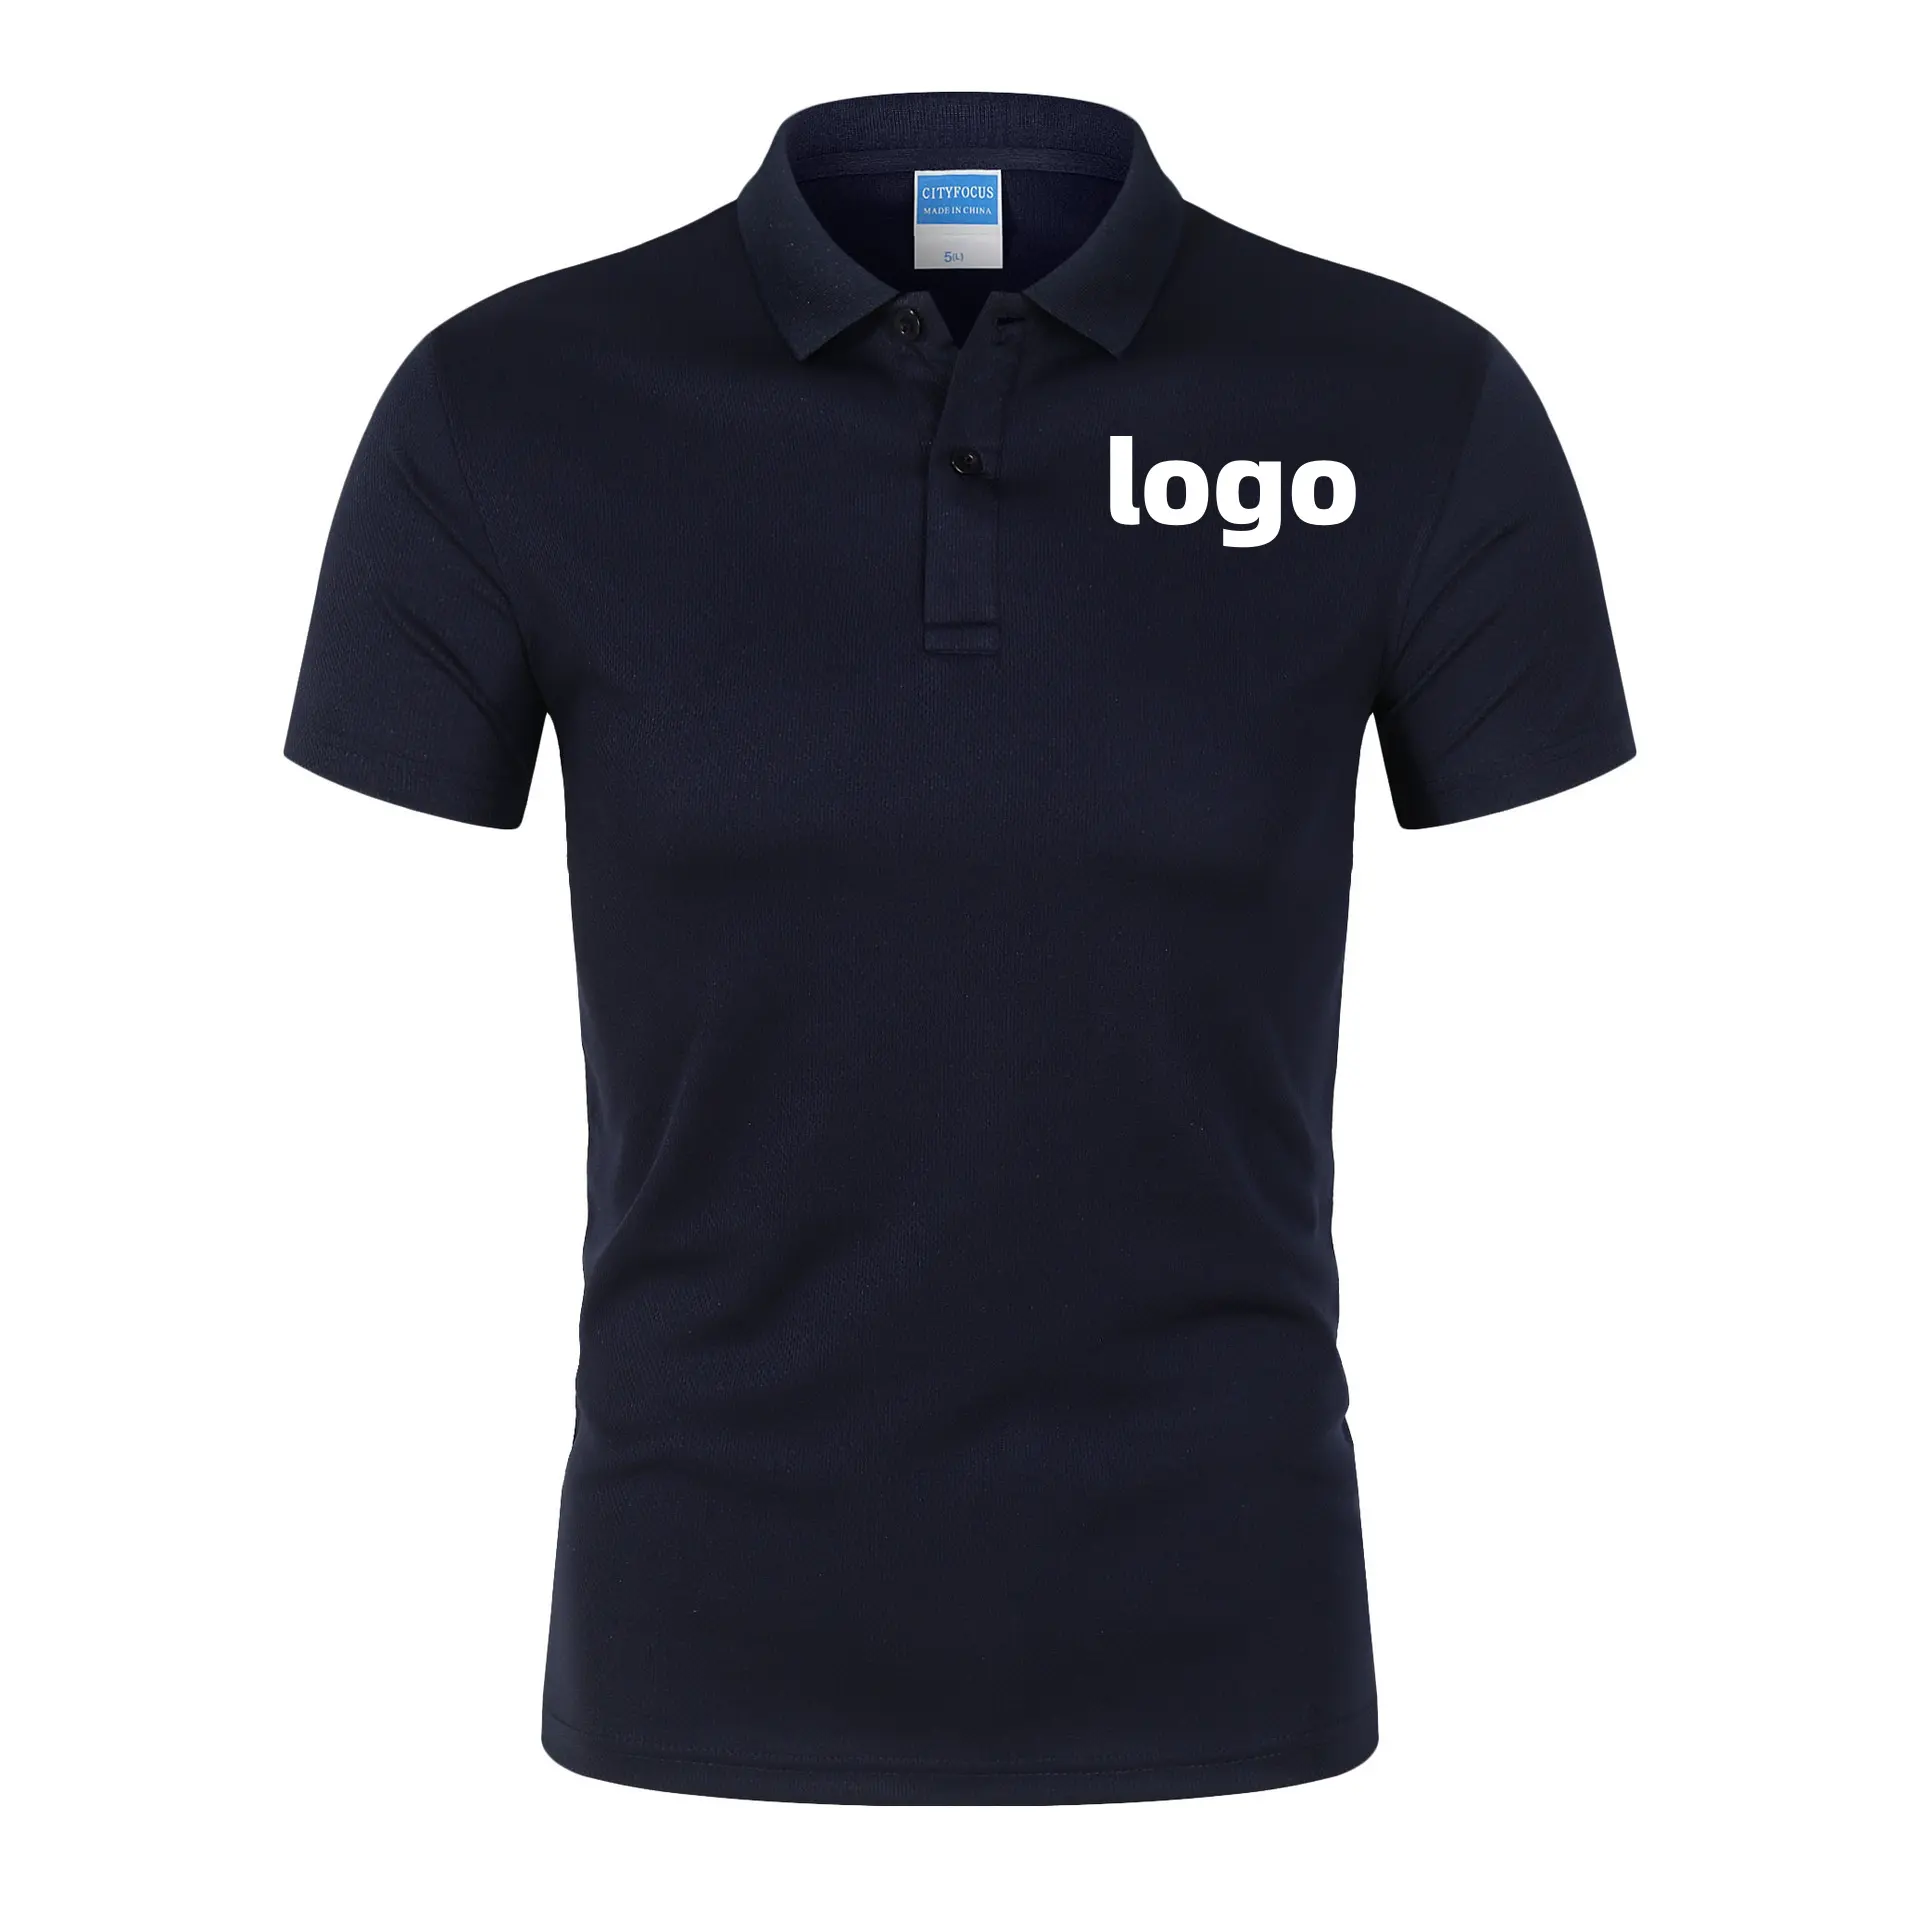 पुरुष कपड़े टी शर्ट कस्टम गोल्फ पोलो शर्ट और पुरुषों के लिए पुरुषों के पोलो शर्ट